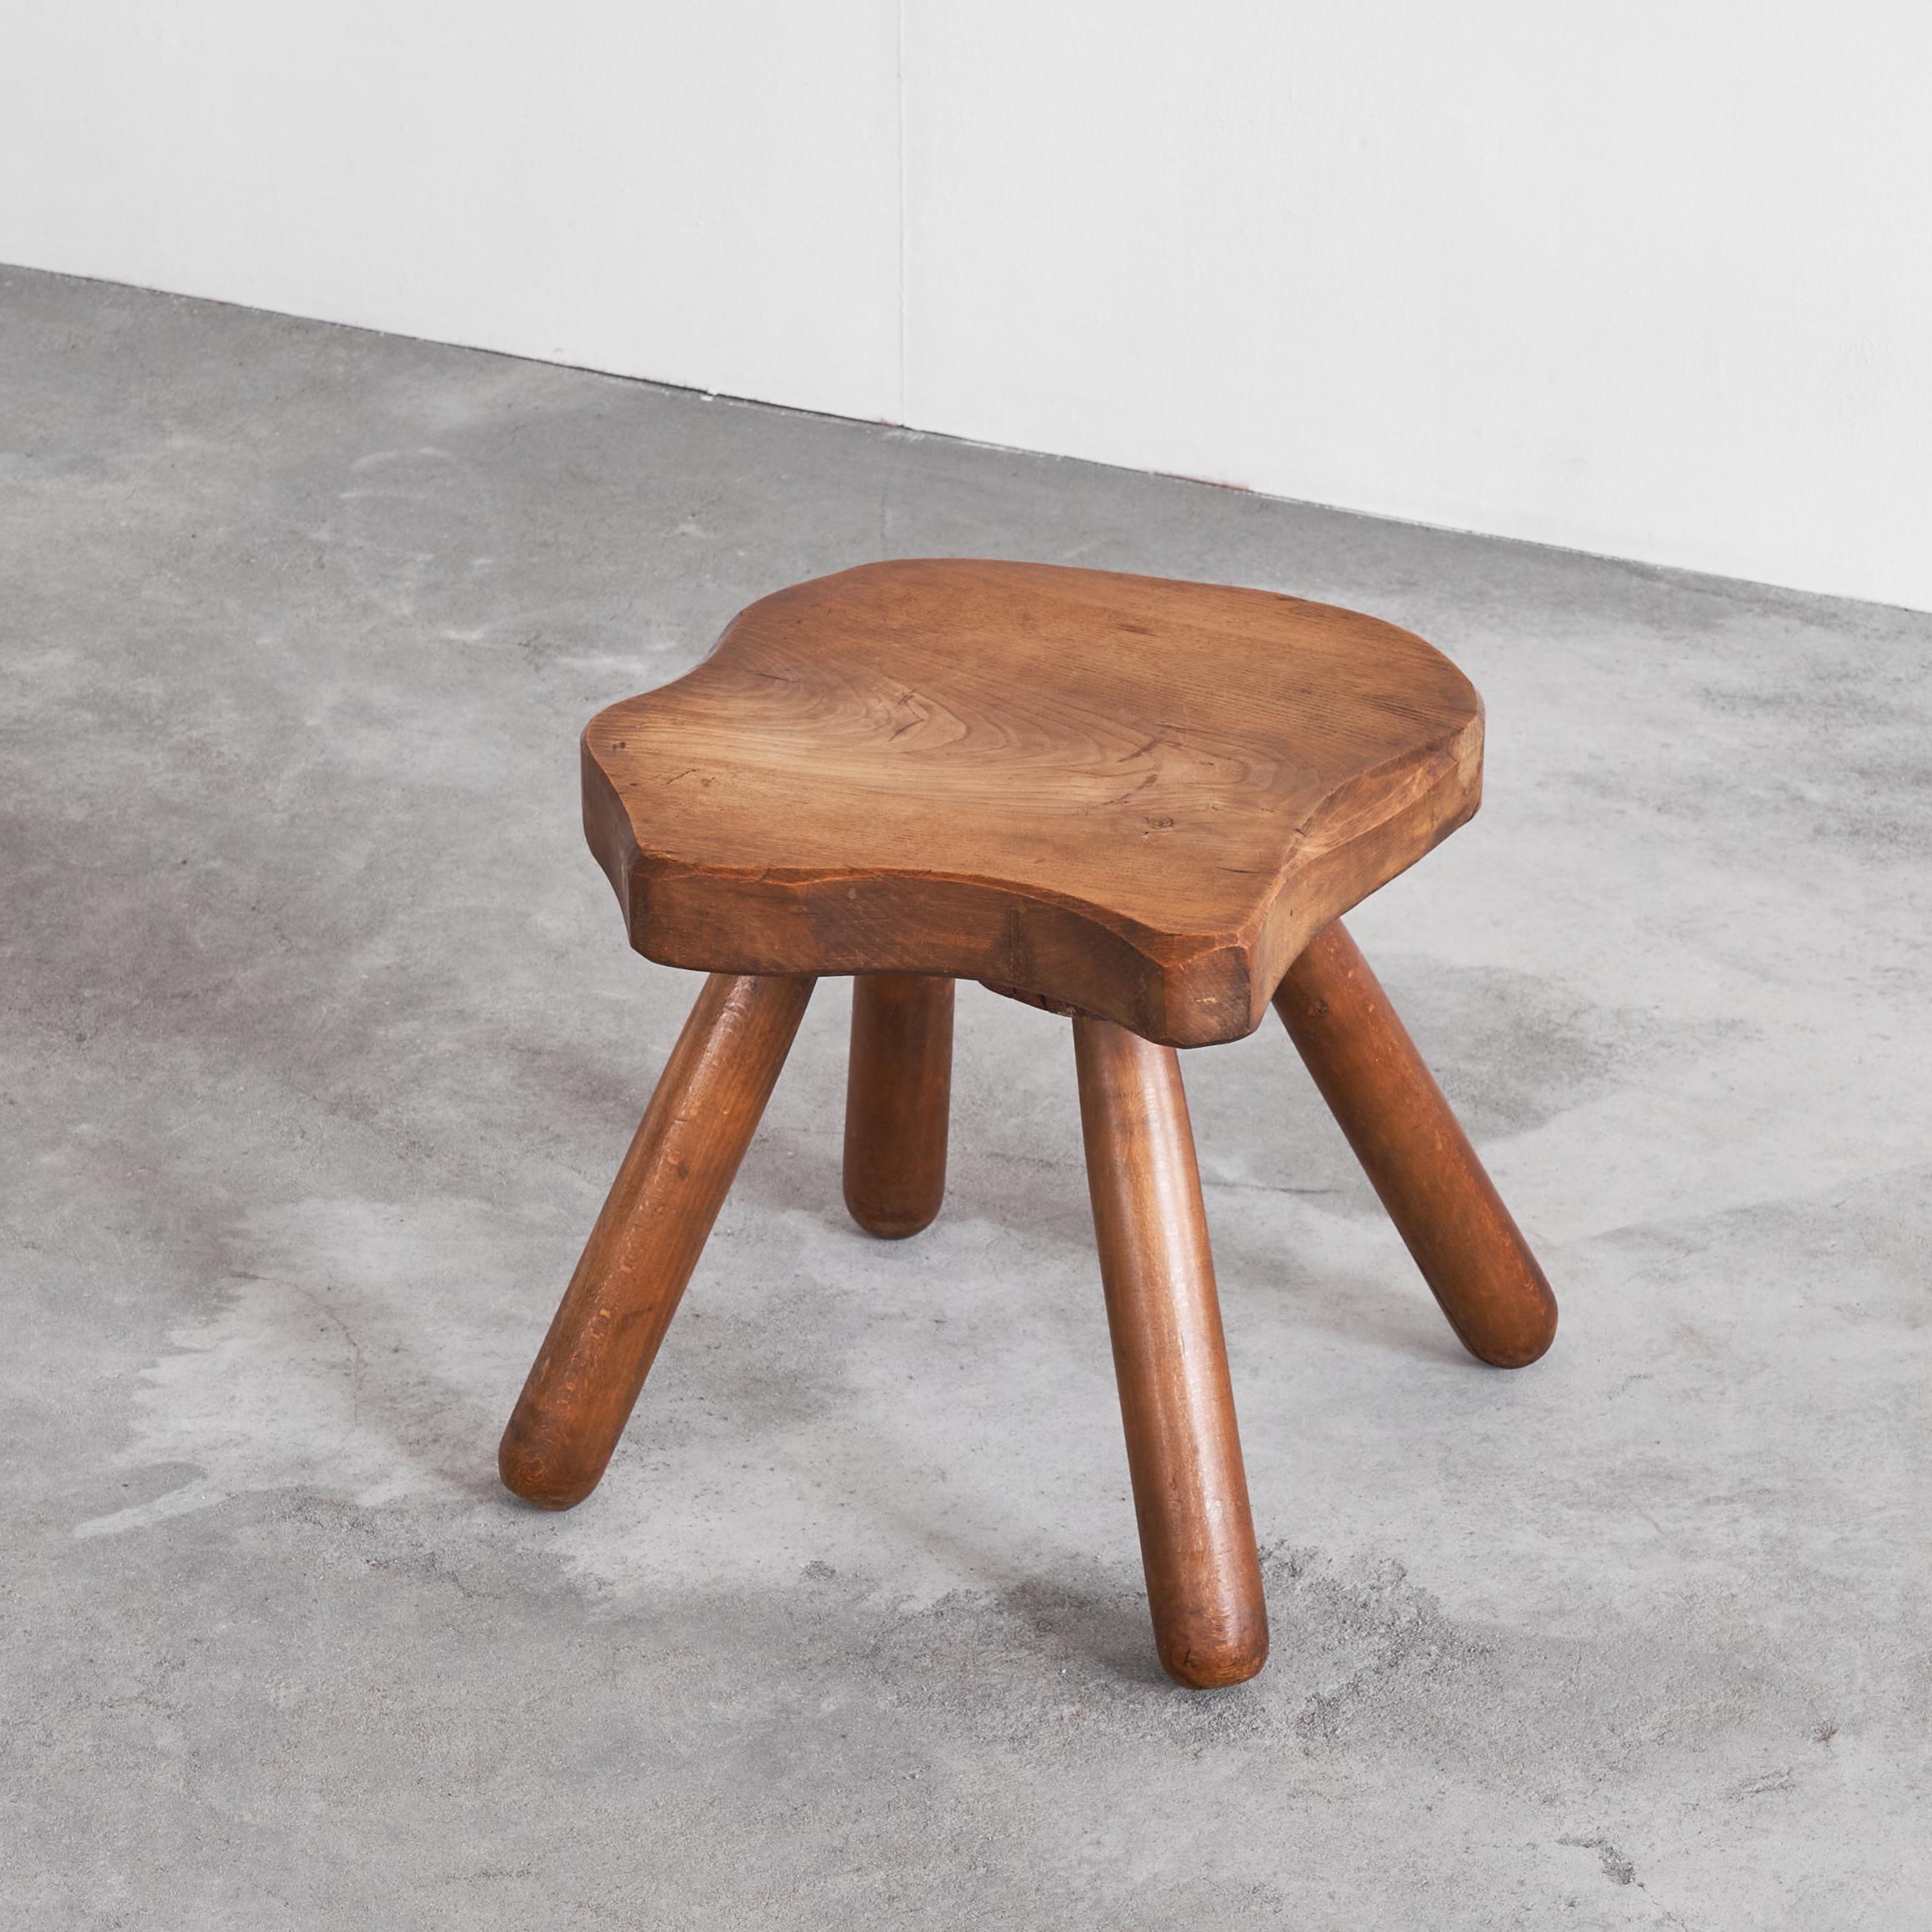 Mid-Century Modern Freeform Wabi Sabi Side Table or Stool in Solid Wood 1950s